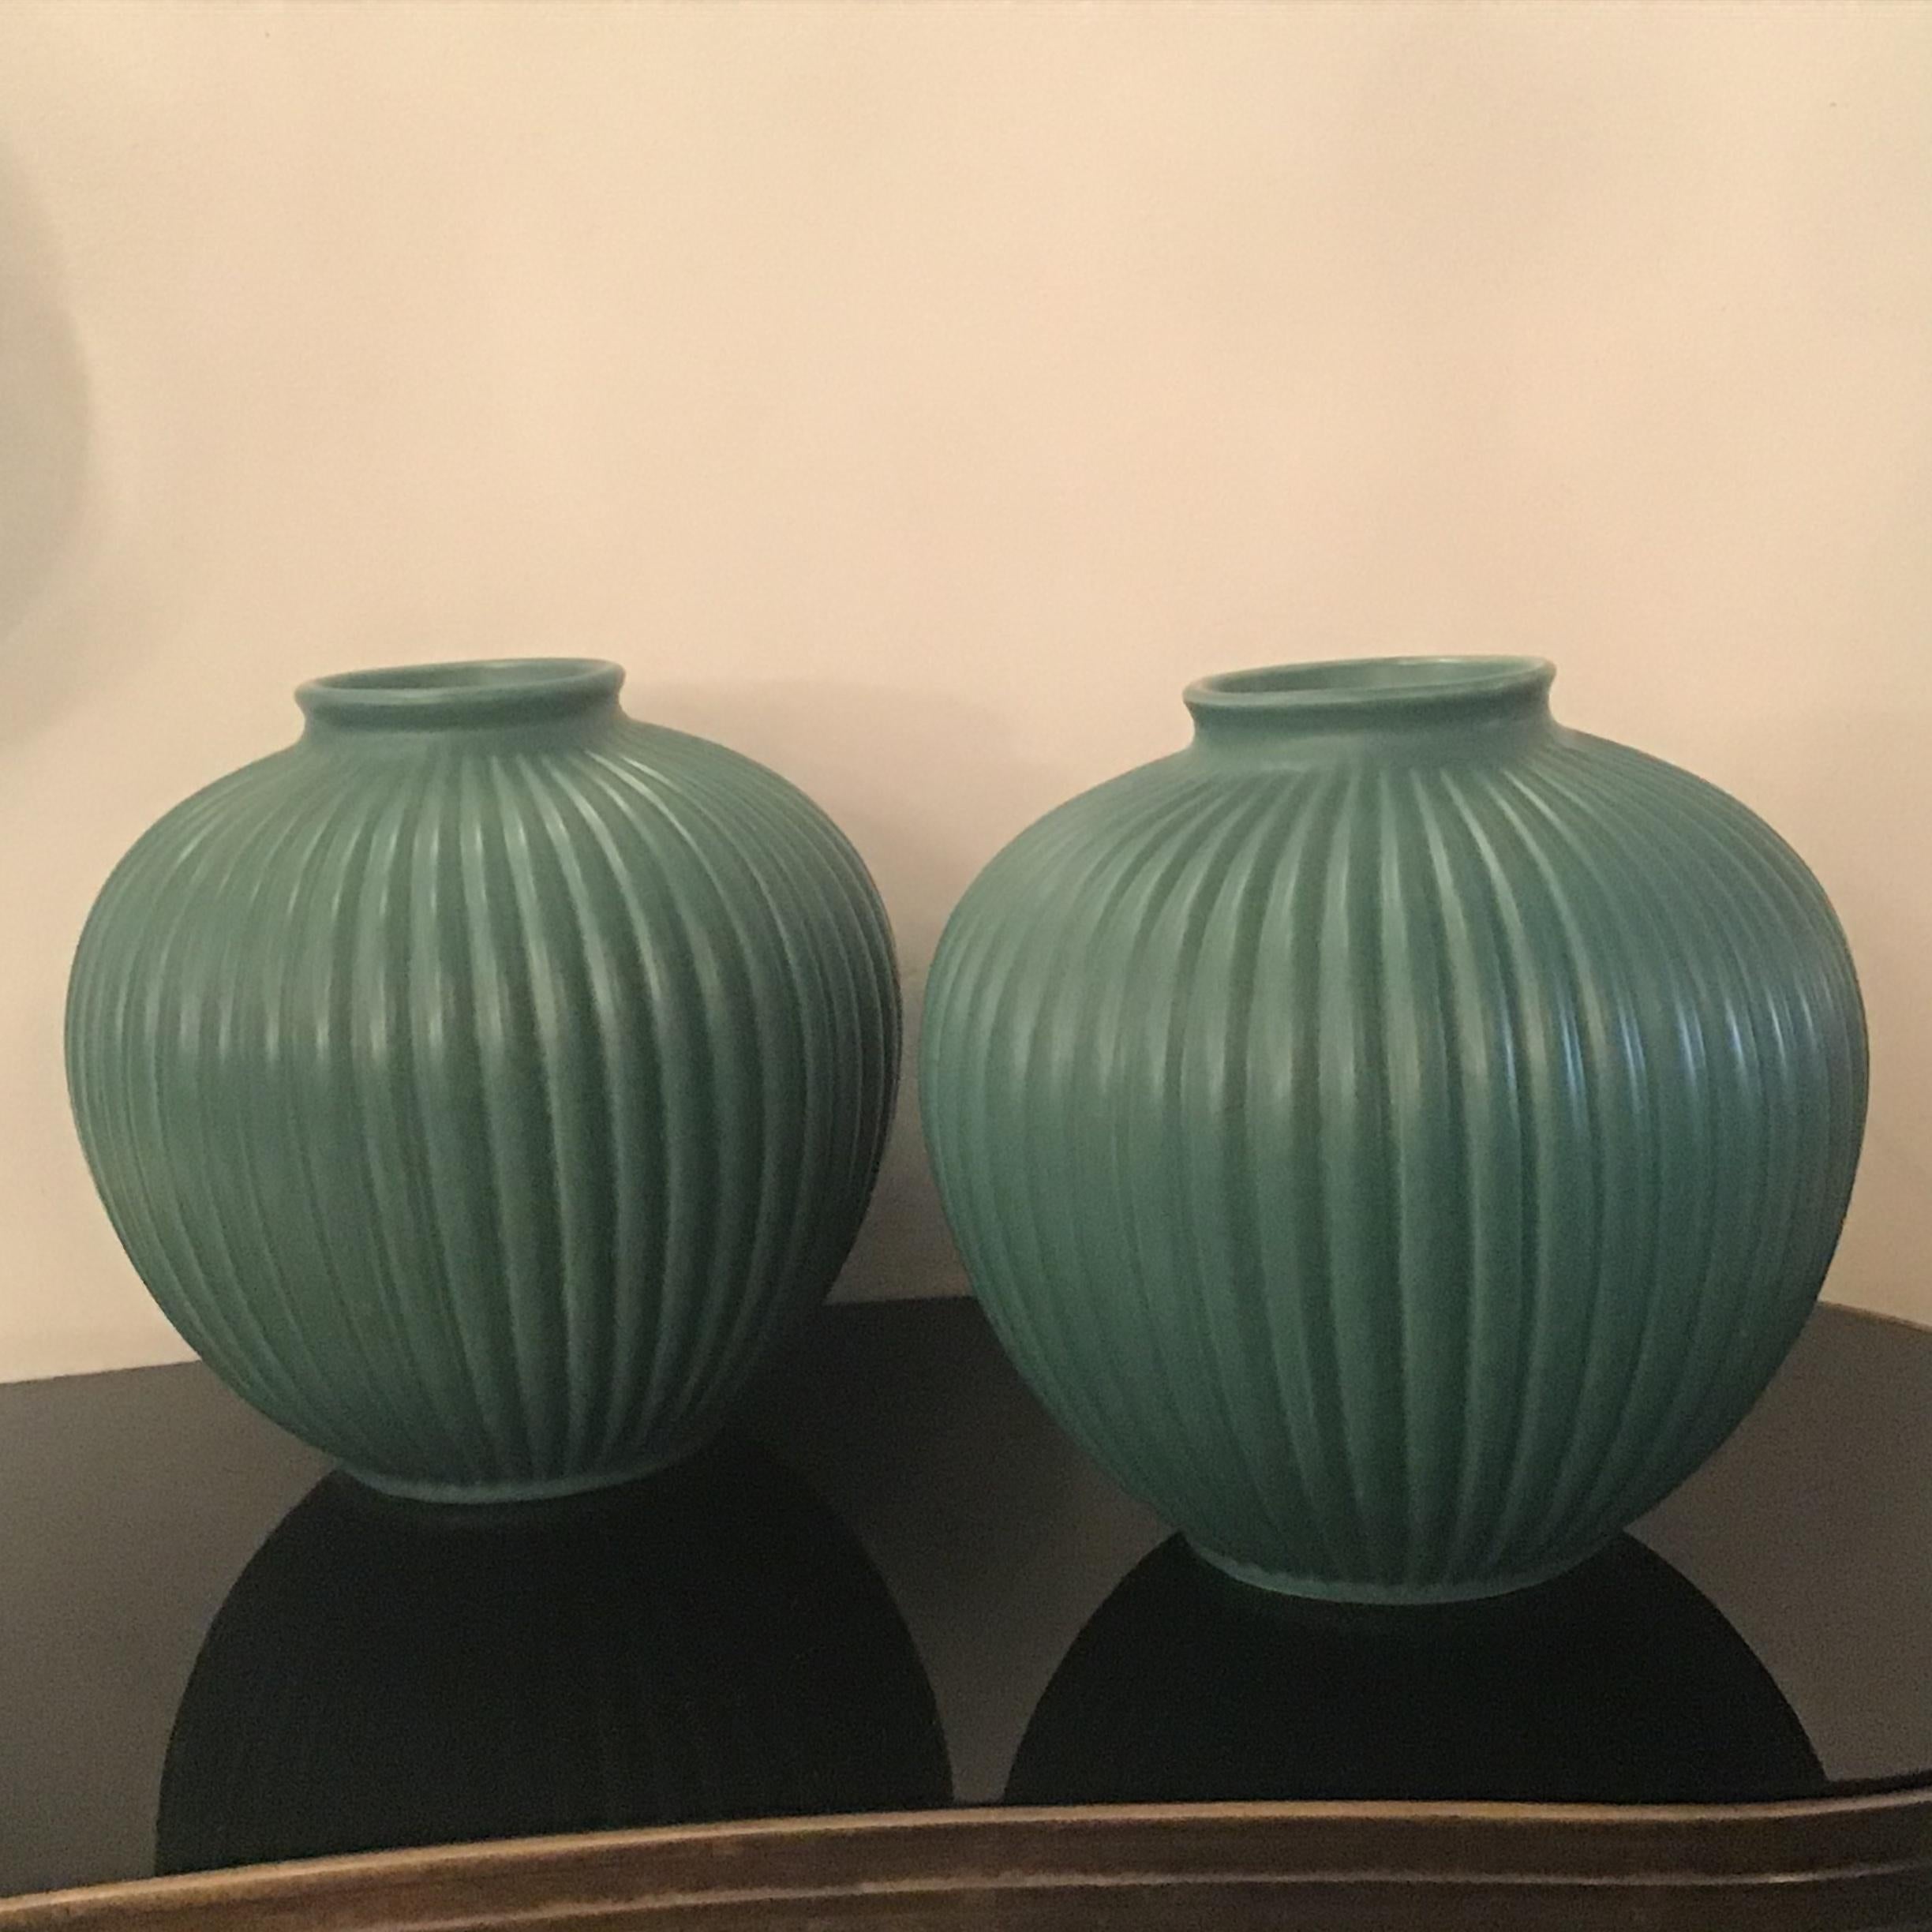 Richard Ginori Giovanni Gariboldi couple vase green ceramic 1950 Italy.